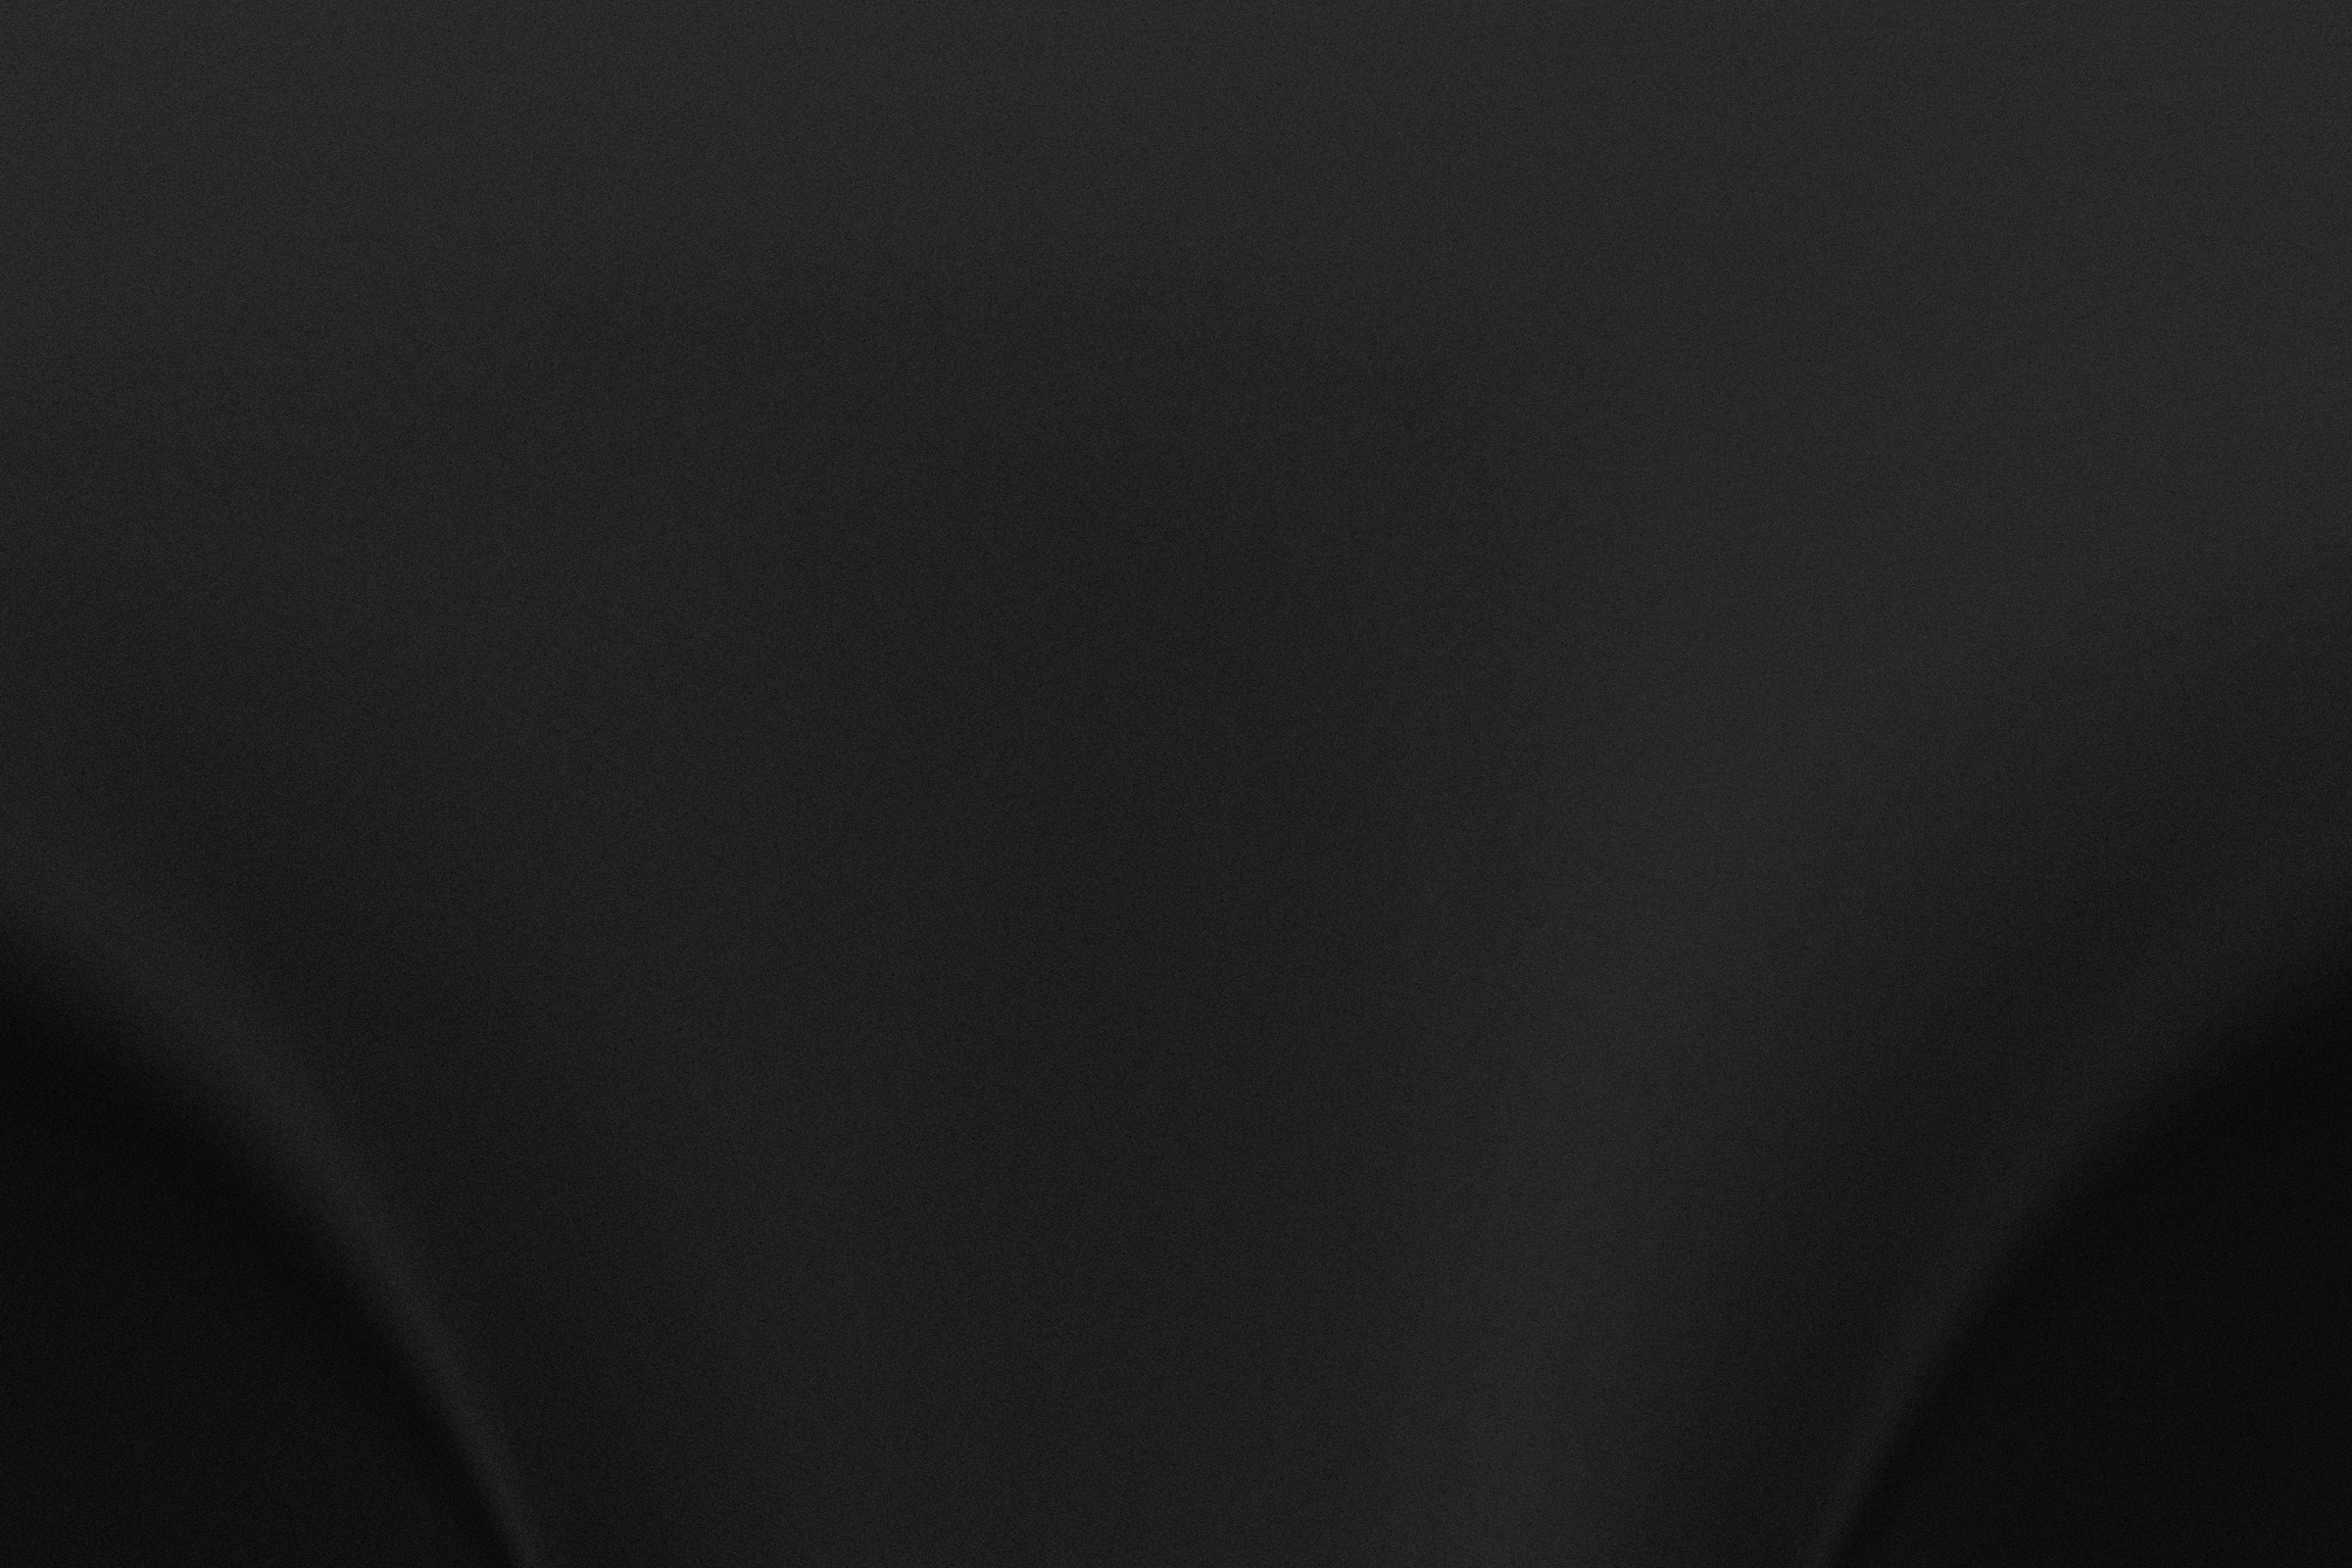 Blurred Black Background 